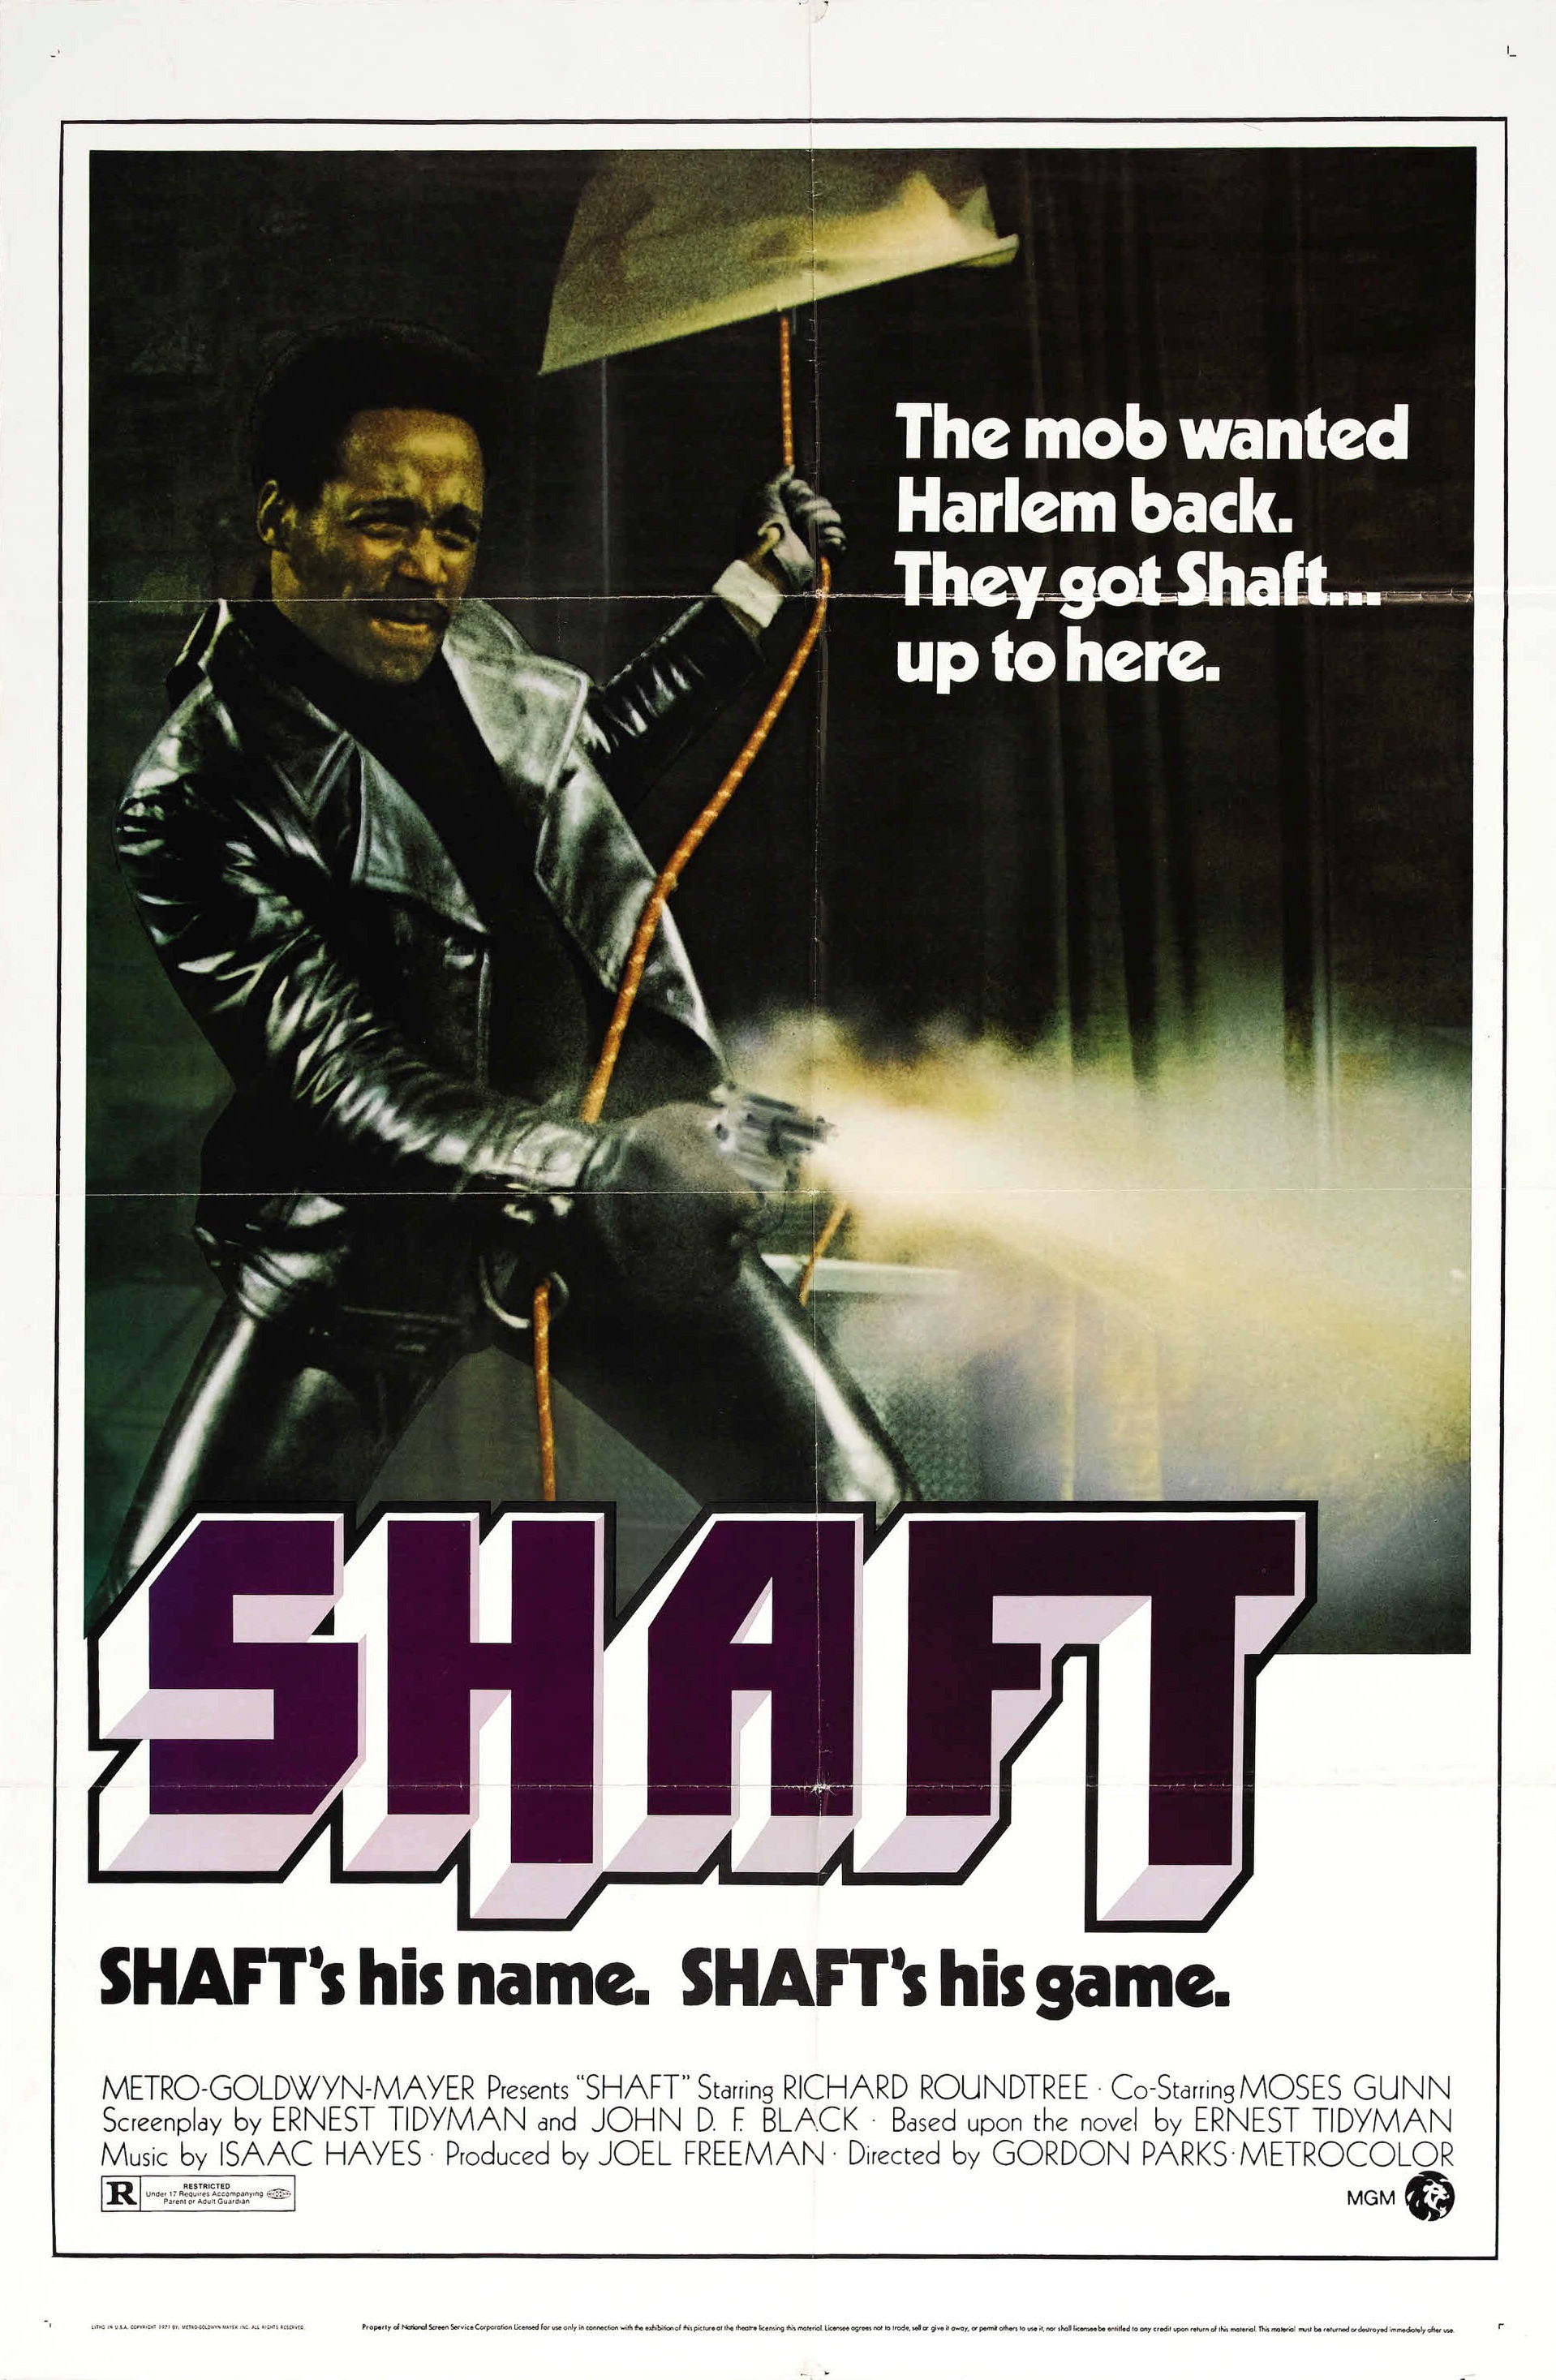 Mega Sized Movie Poster Image for Shaft 